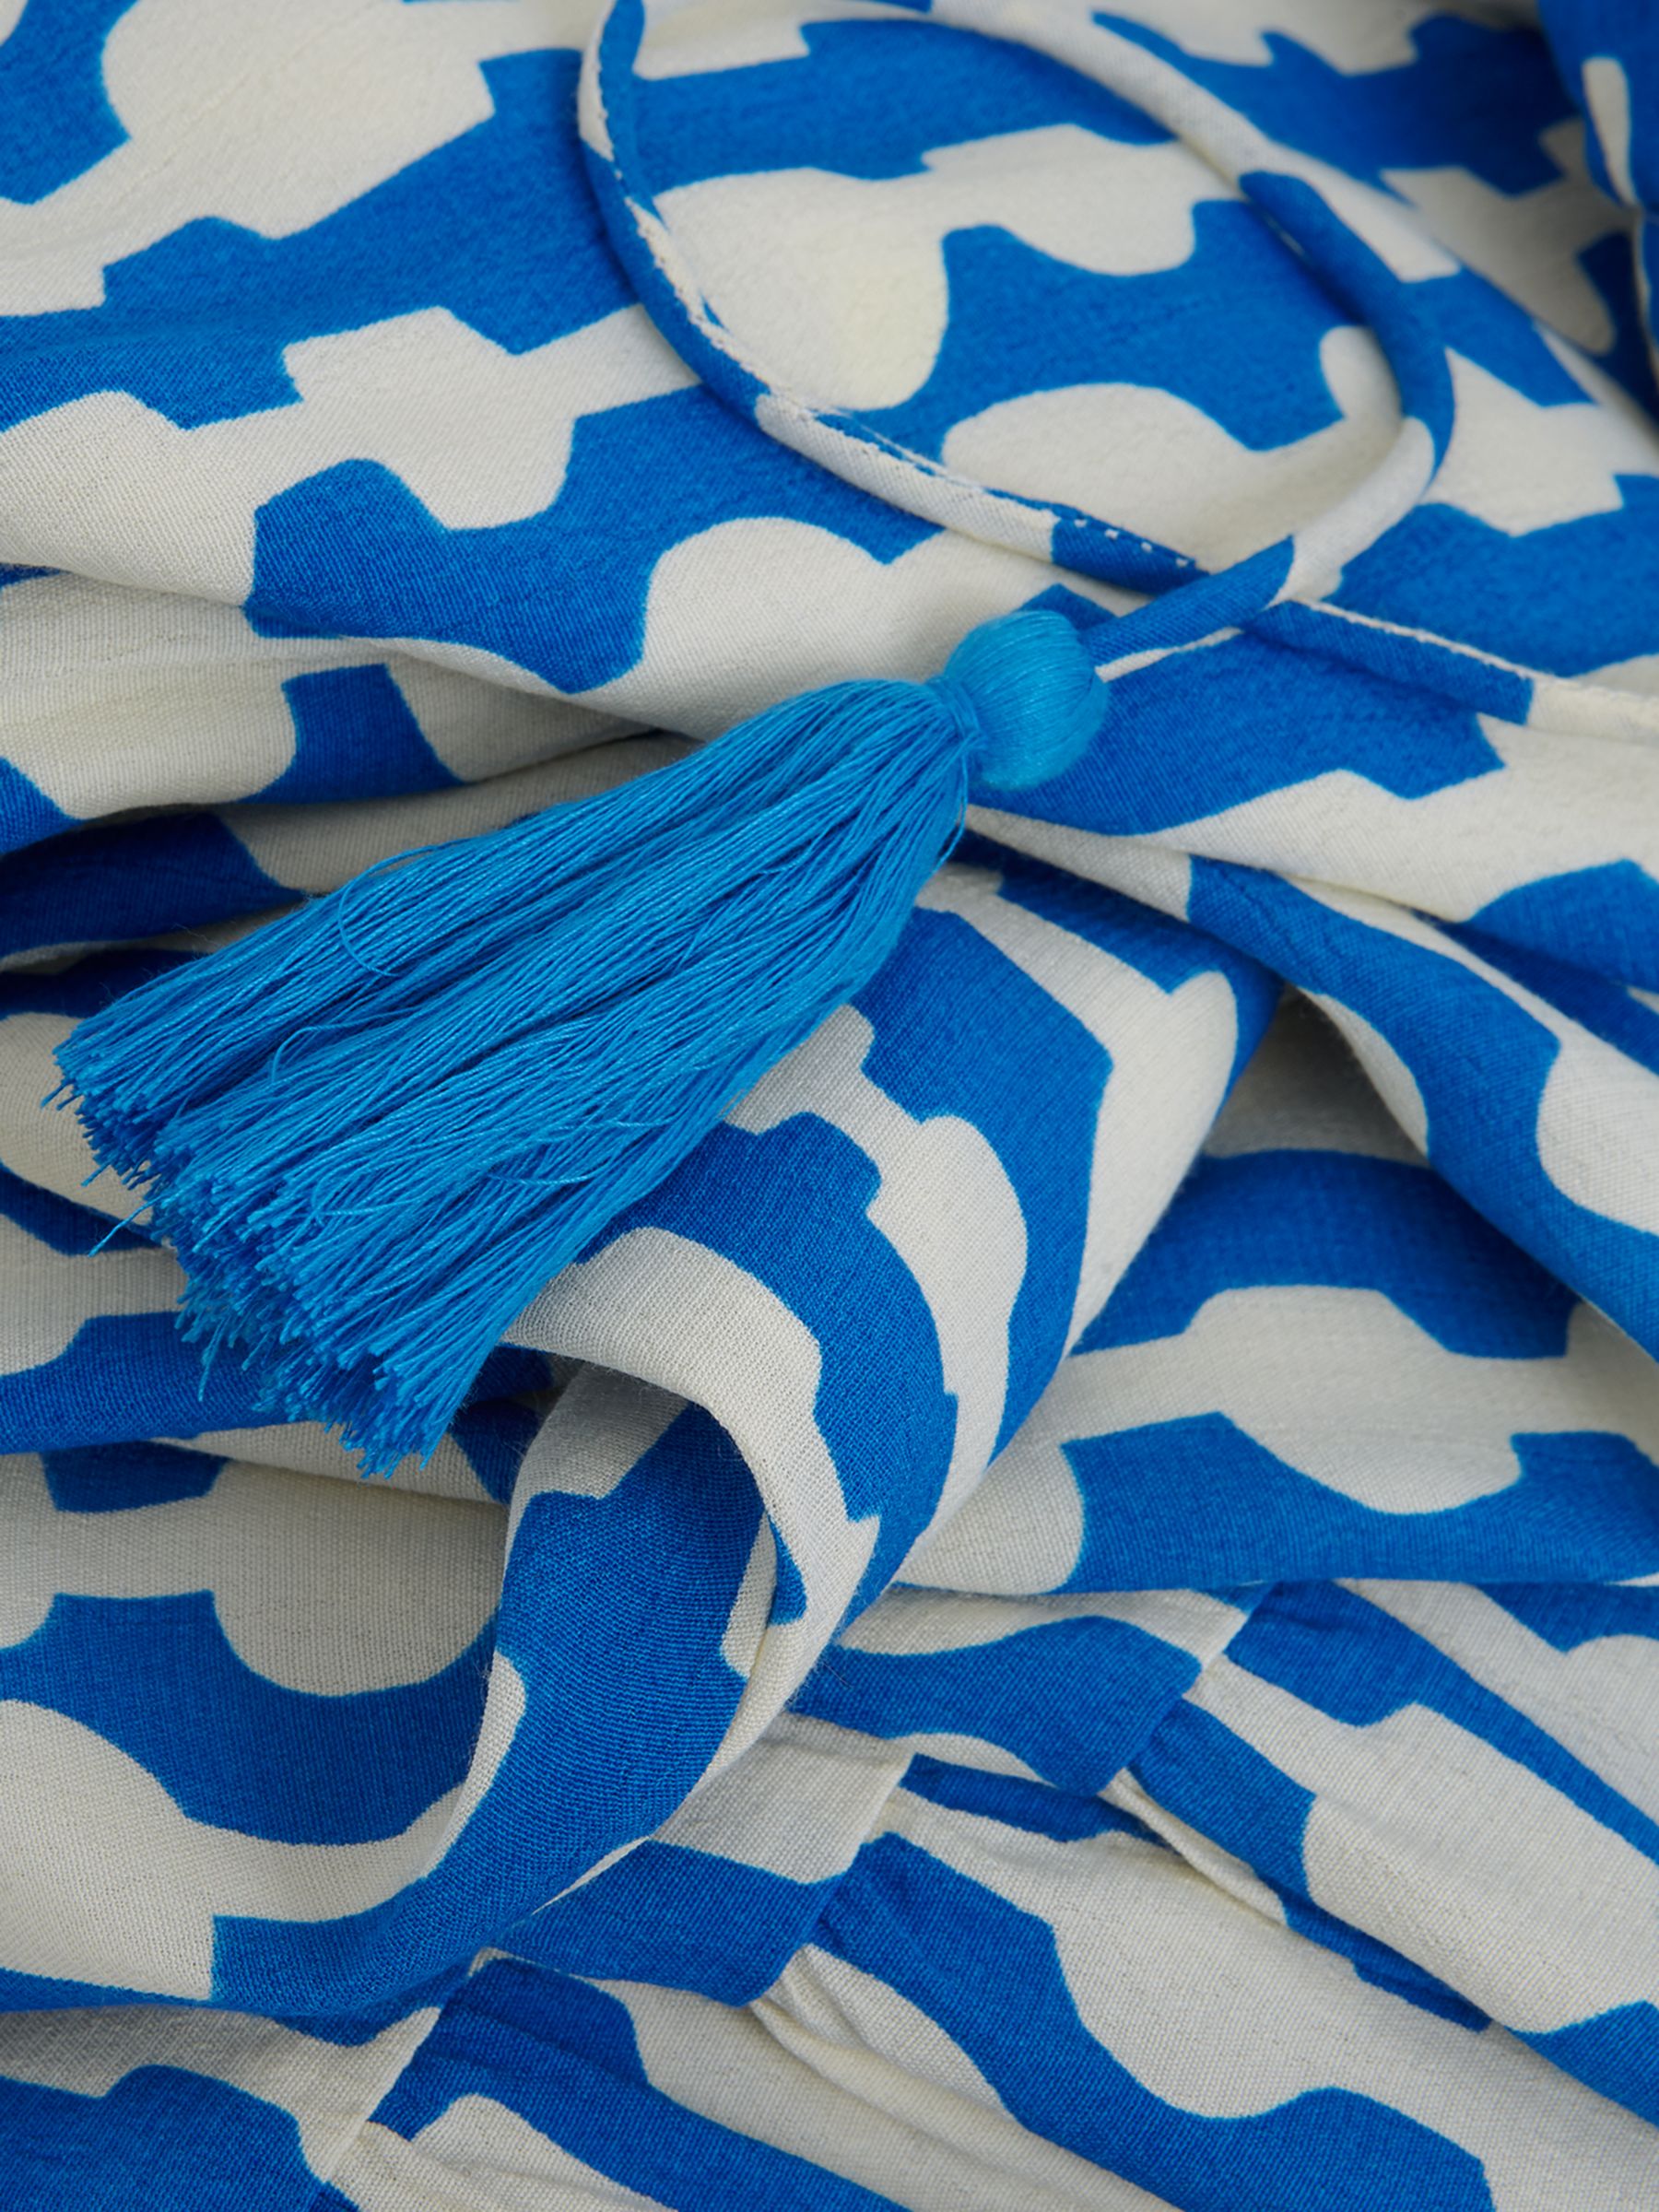 Phase Eight Lara Geometric Print Tiered Maxi Dress, Blue/Ivory, 6